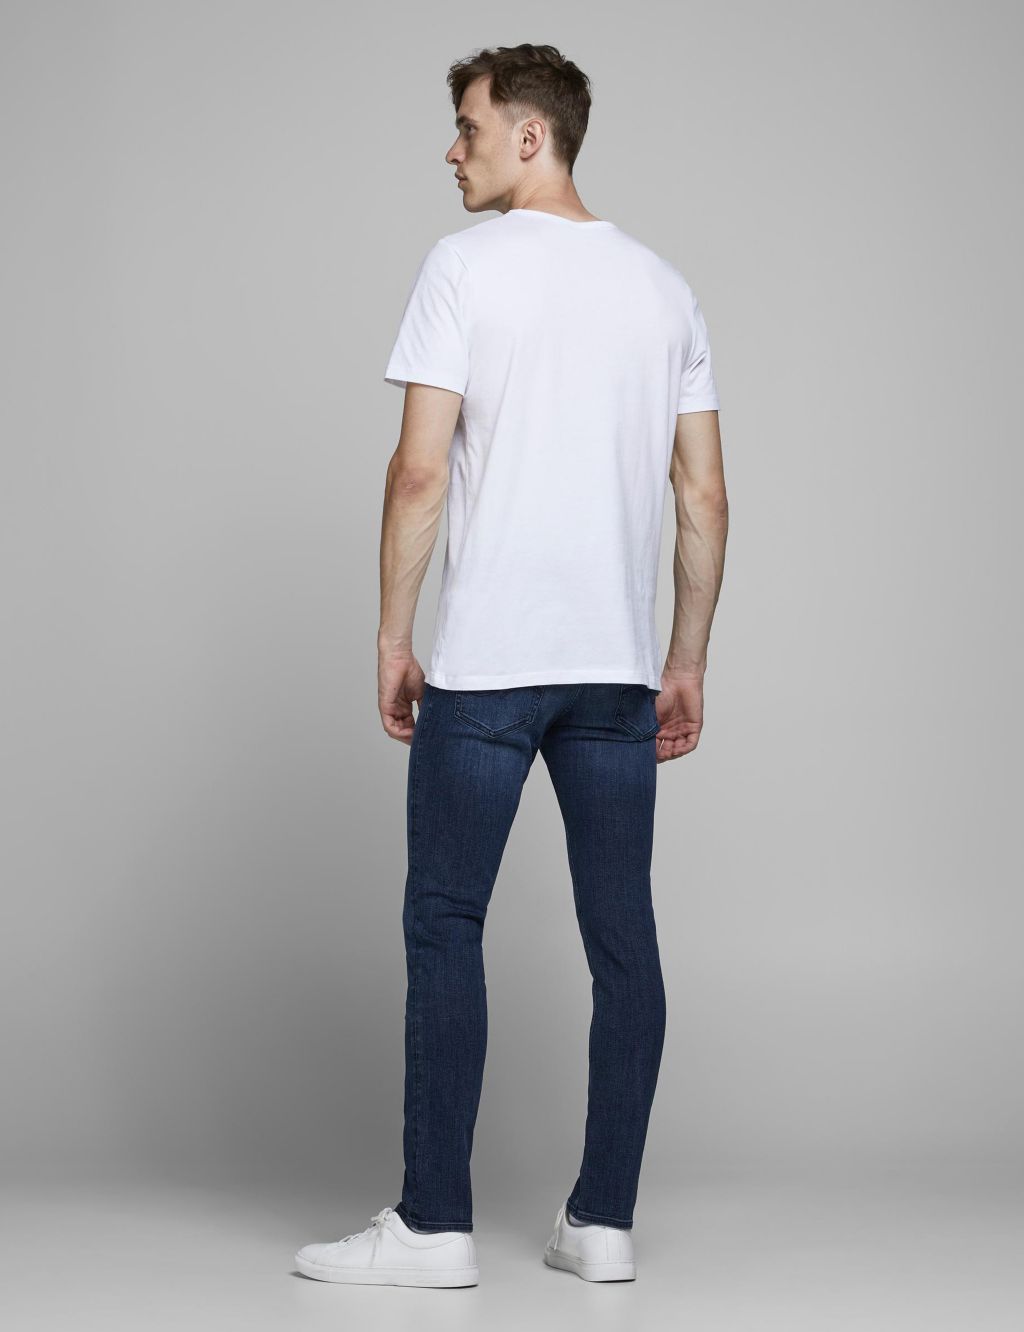 Slim Fit Stretch Jeans image 3